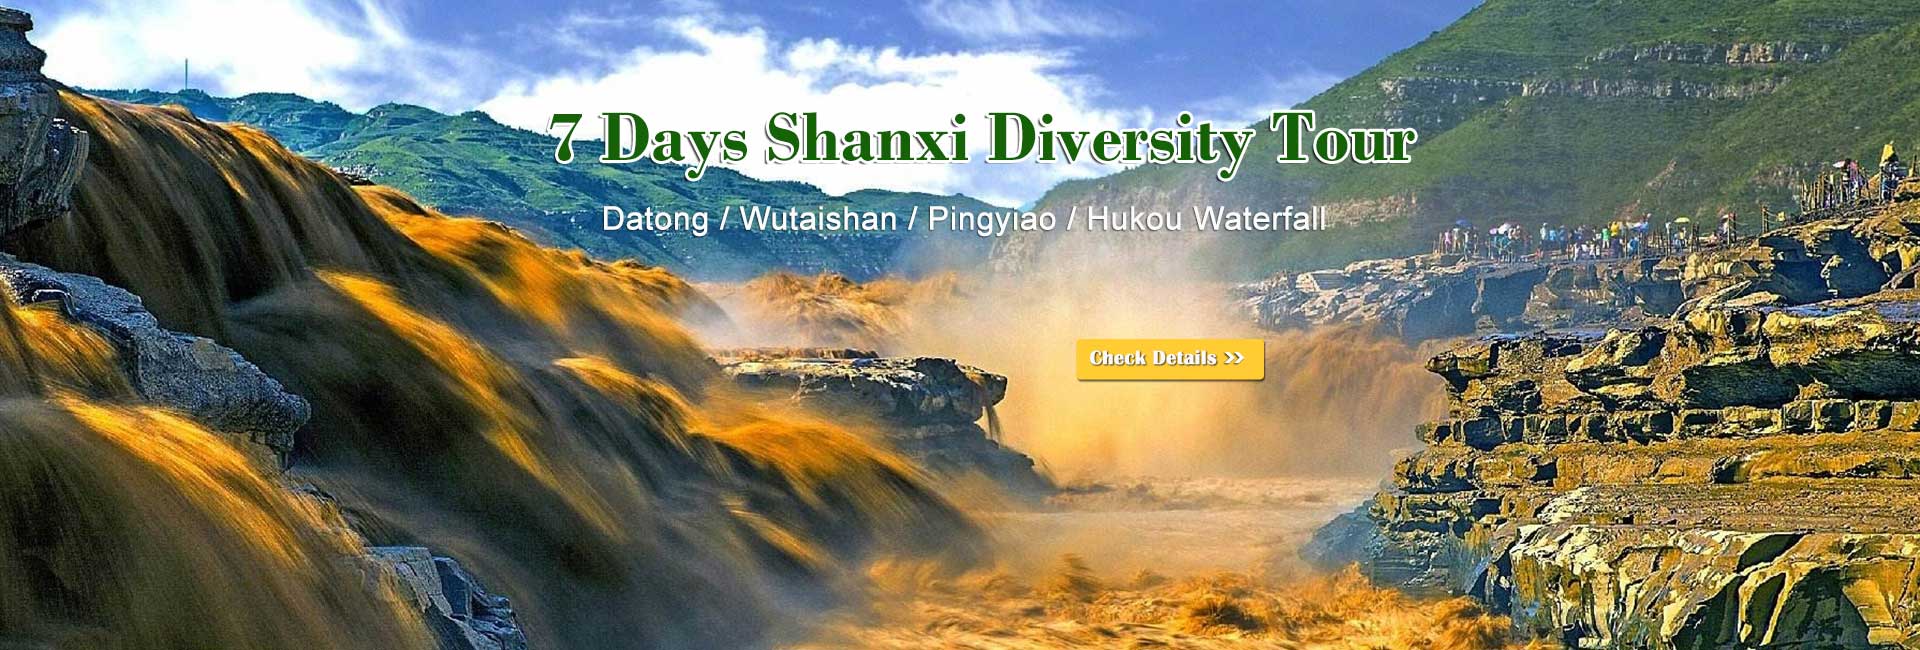 Shanxi Tours 